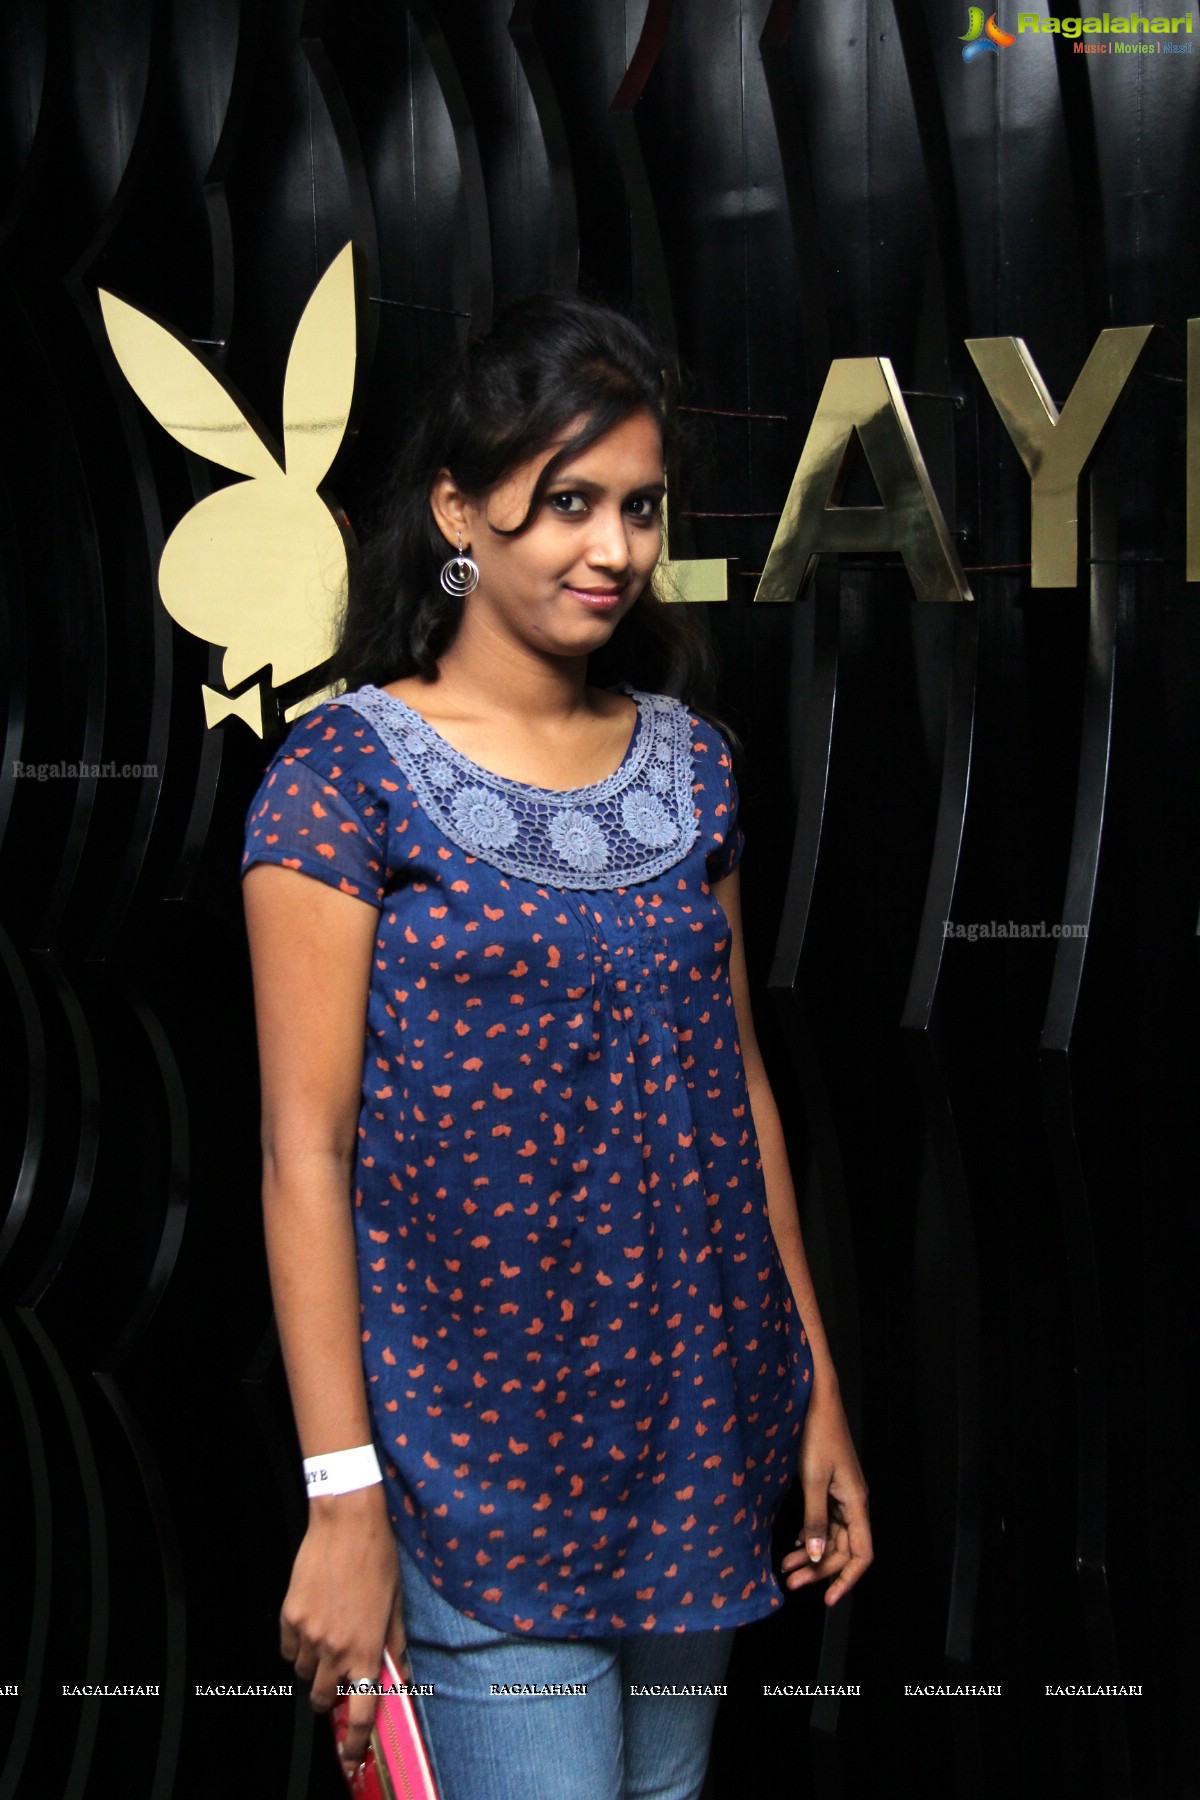 Playboy Club Hyderabad - December 12, 2015